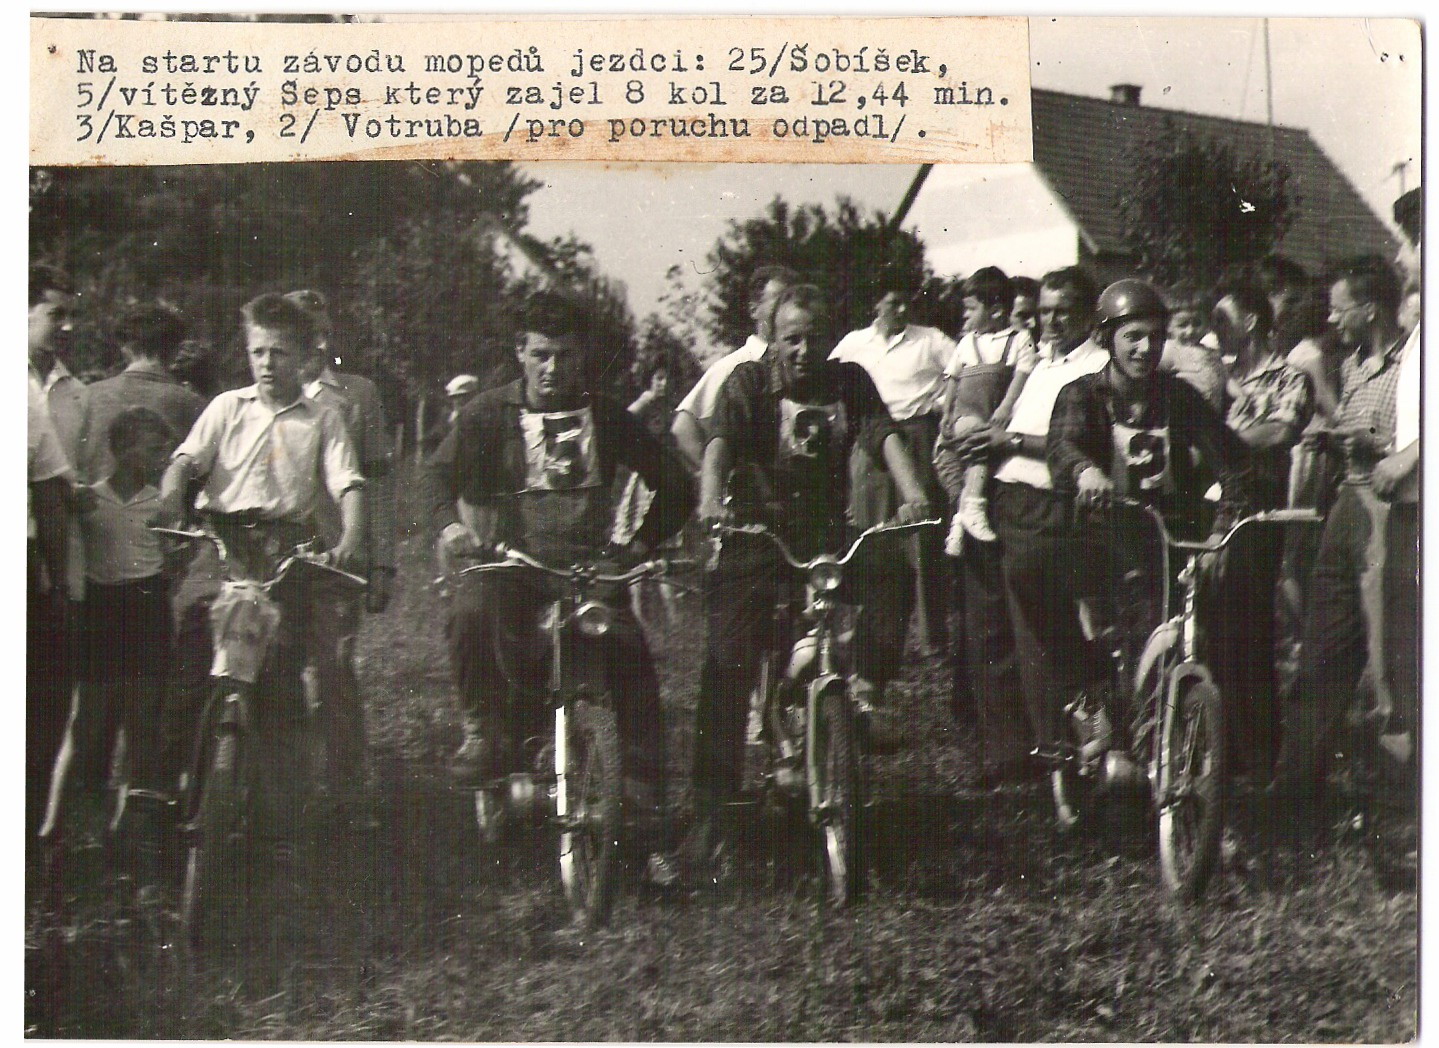 Závodymopedů1960.jpg